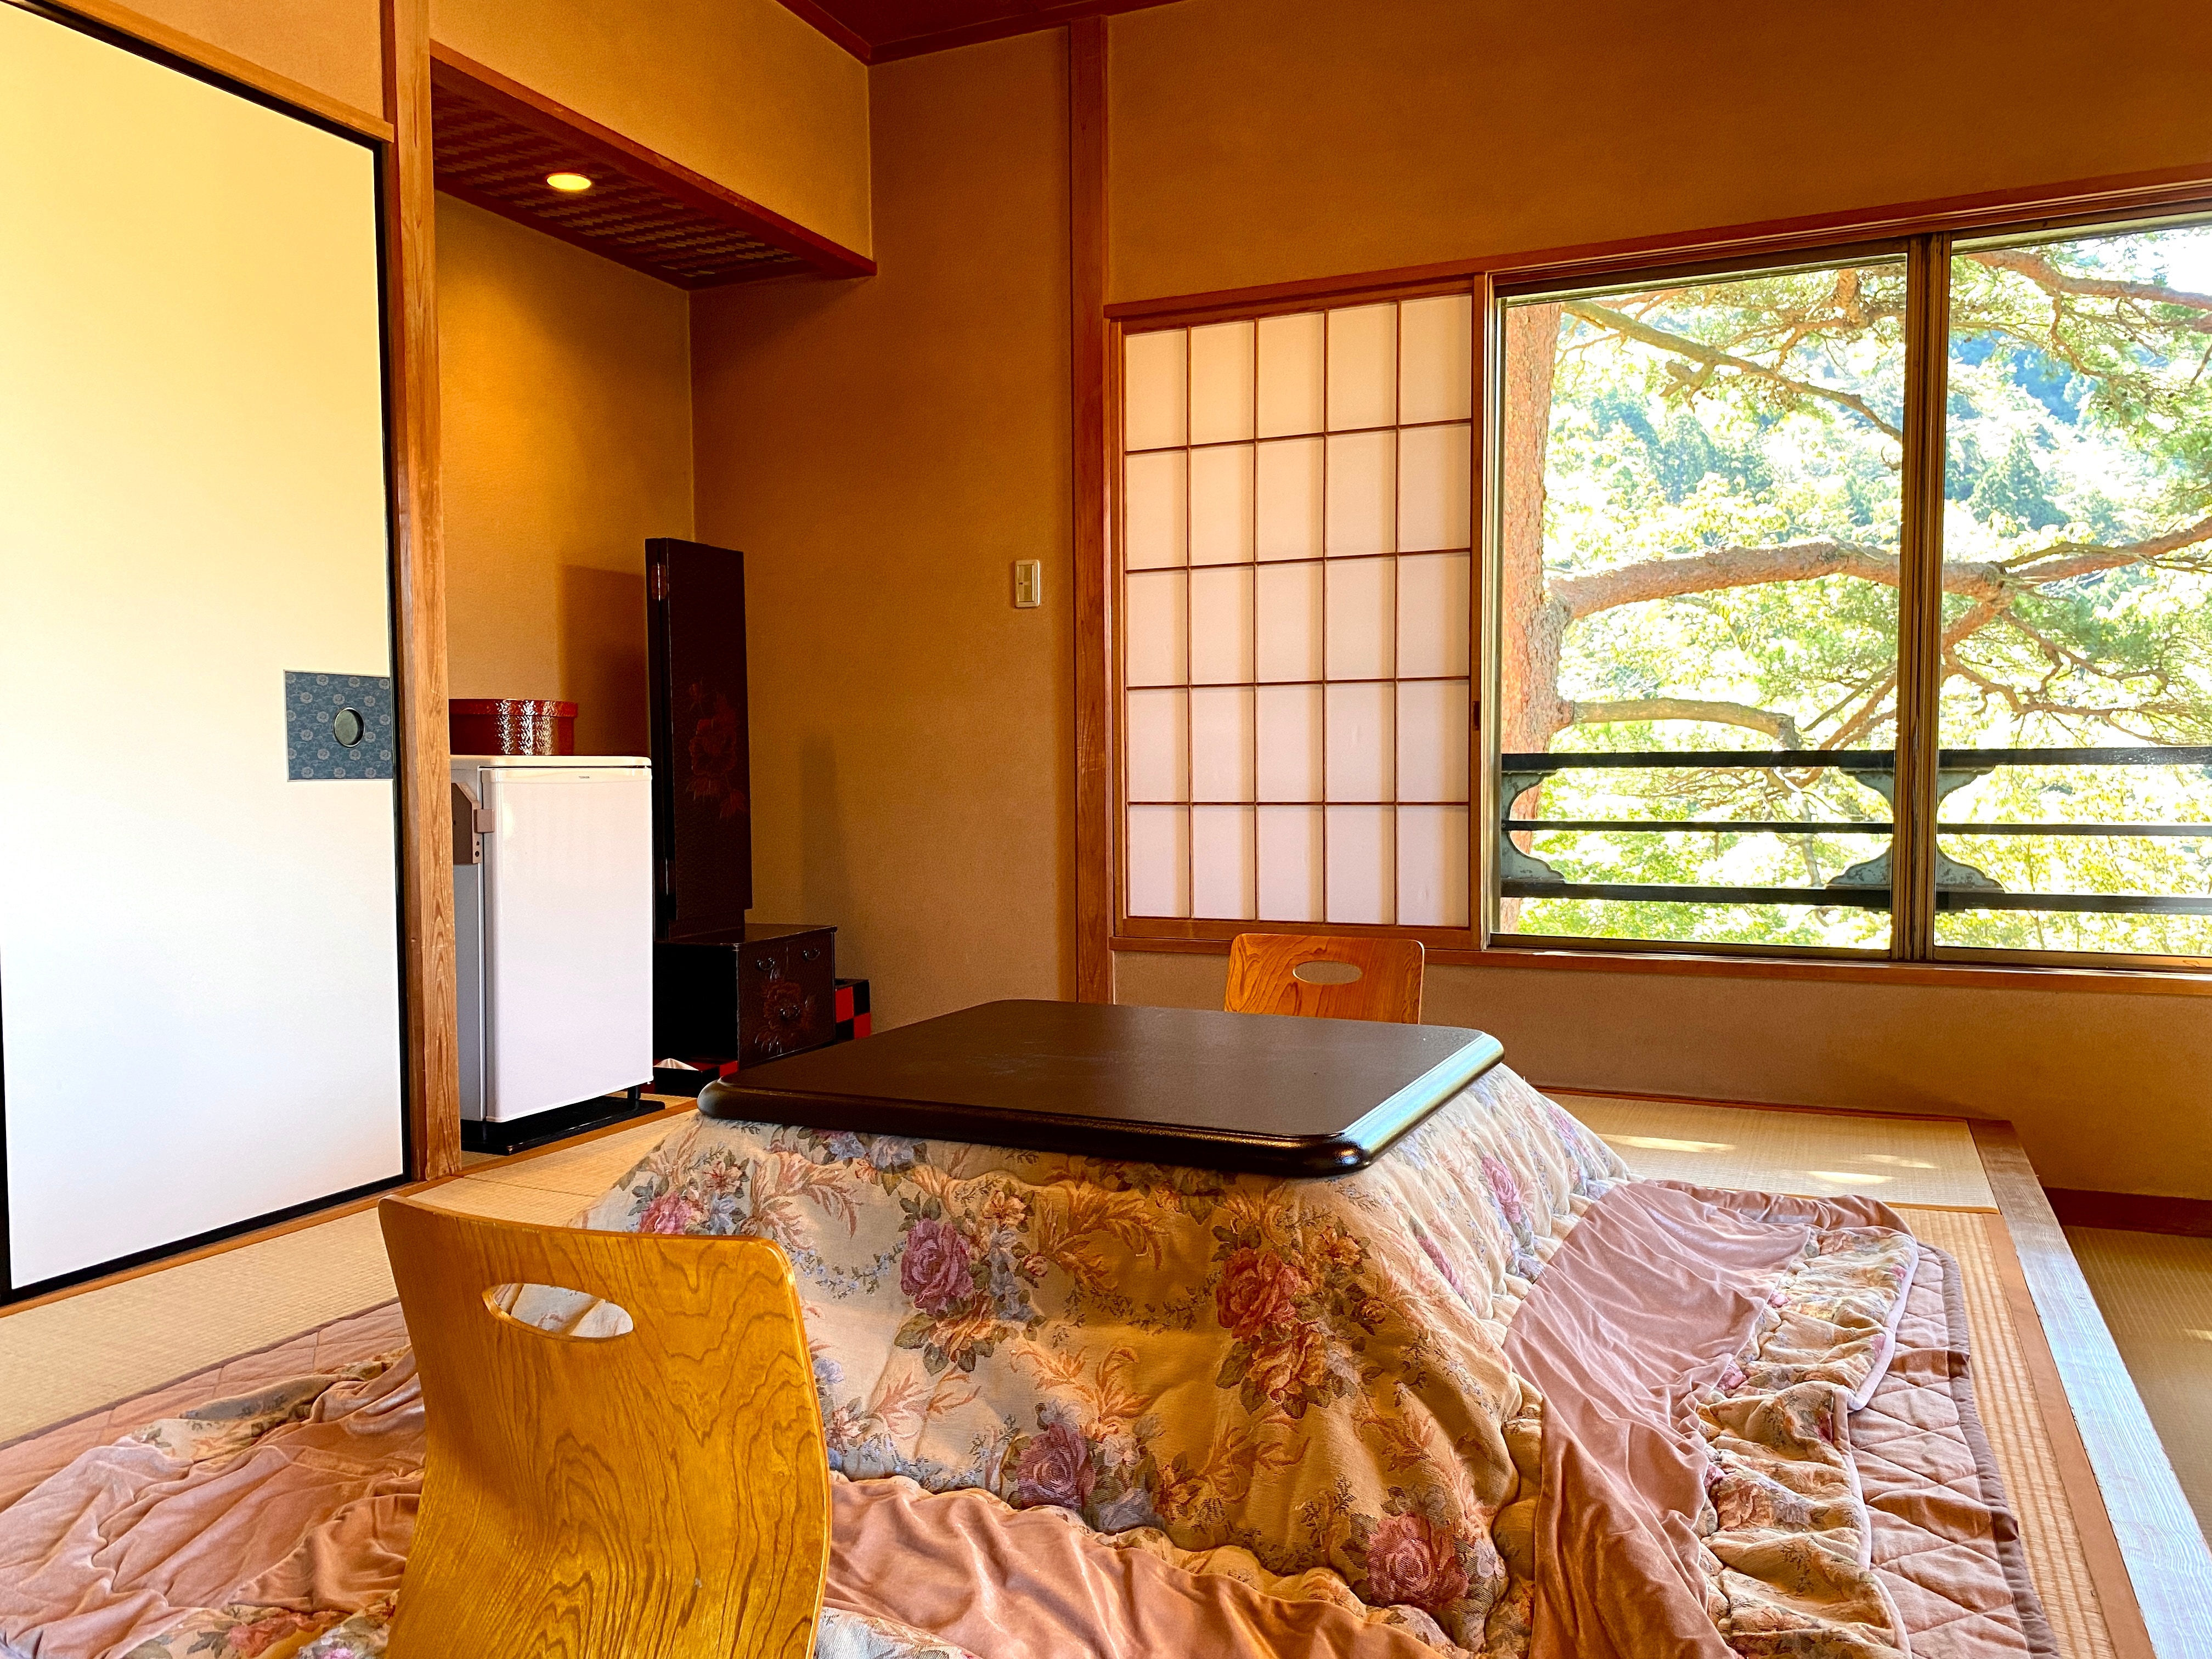 VIP room (17.5 tatami mats + next room + western style room + Japanese cypress bath)